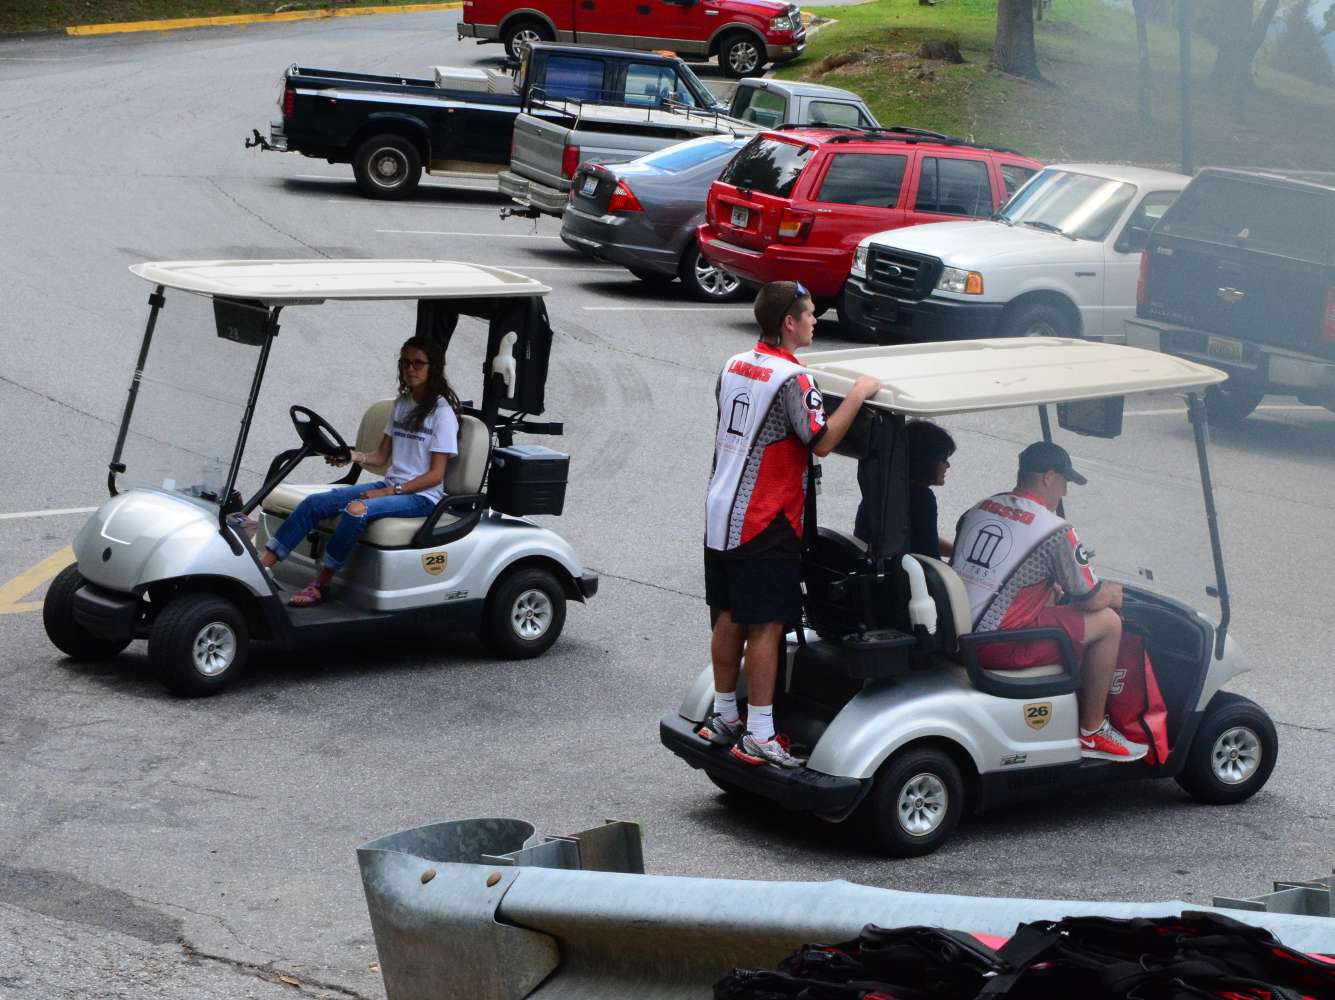 Itâs a constant parade of golf carts going in and out of the weigh-in area.